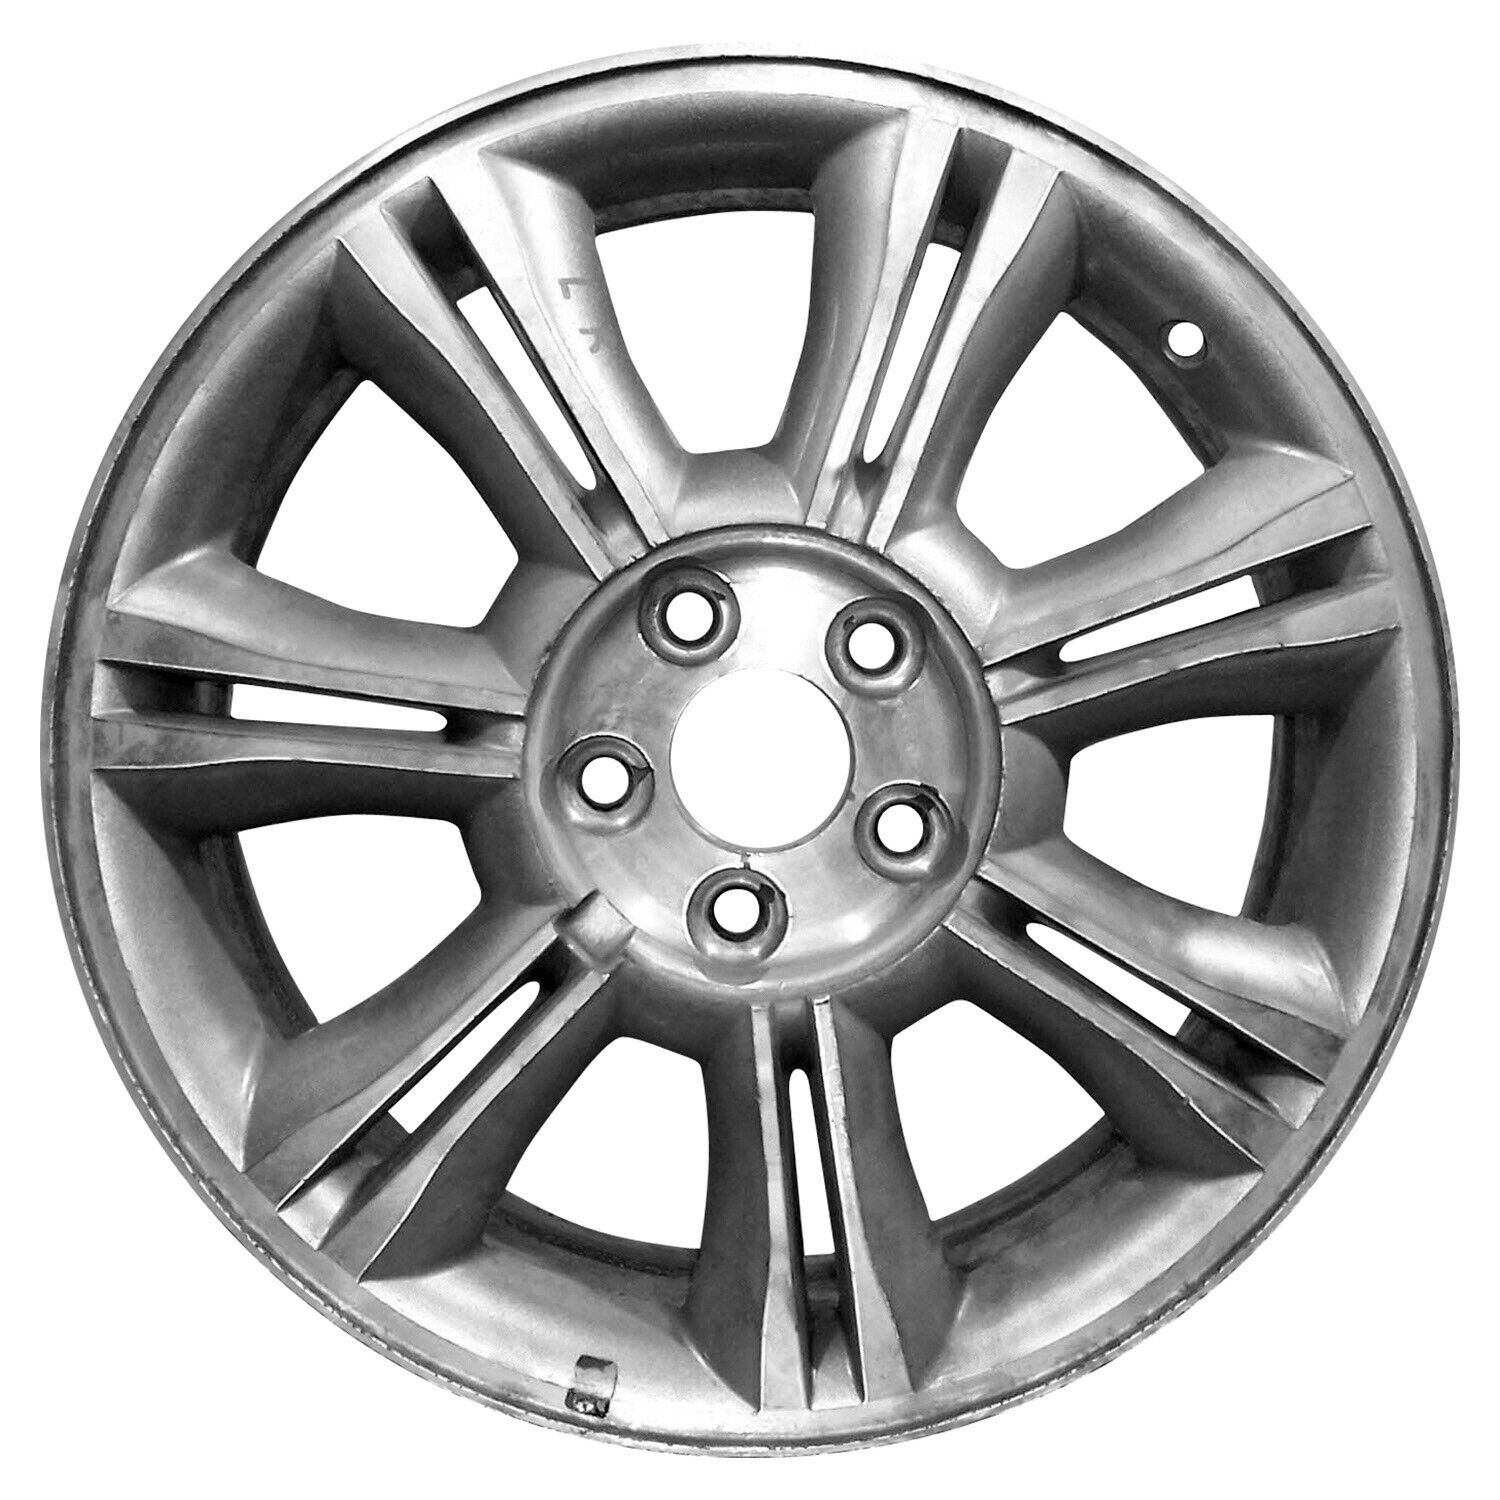 03698 Reconditioned OEM Aluminum Wheel 18x7.5 fits 2008-2009 Mercury Sable